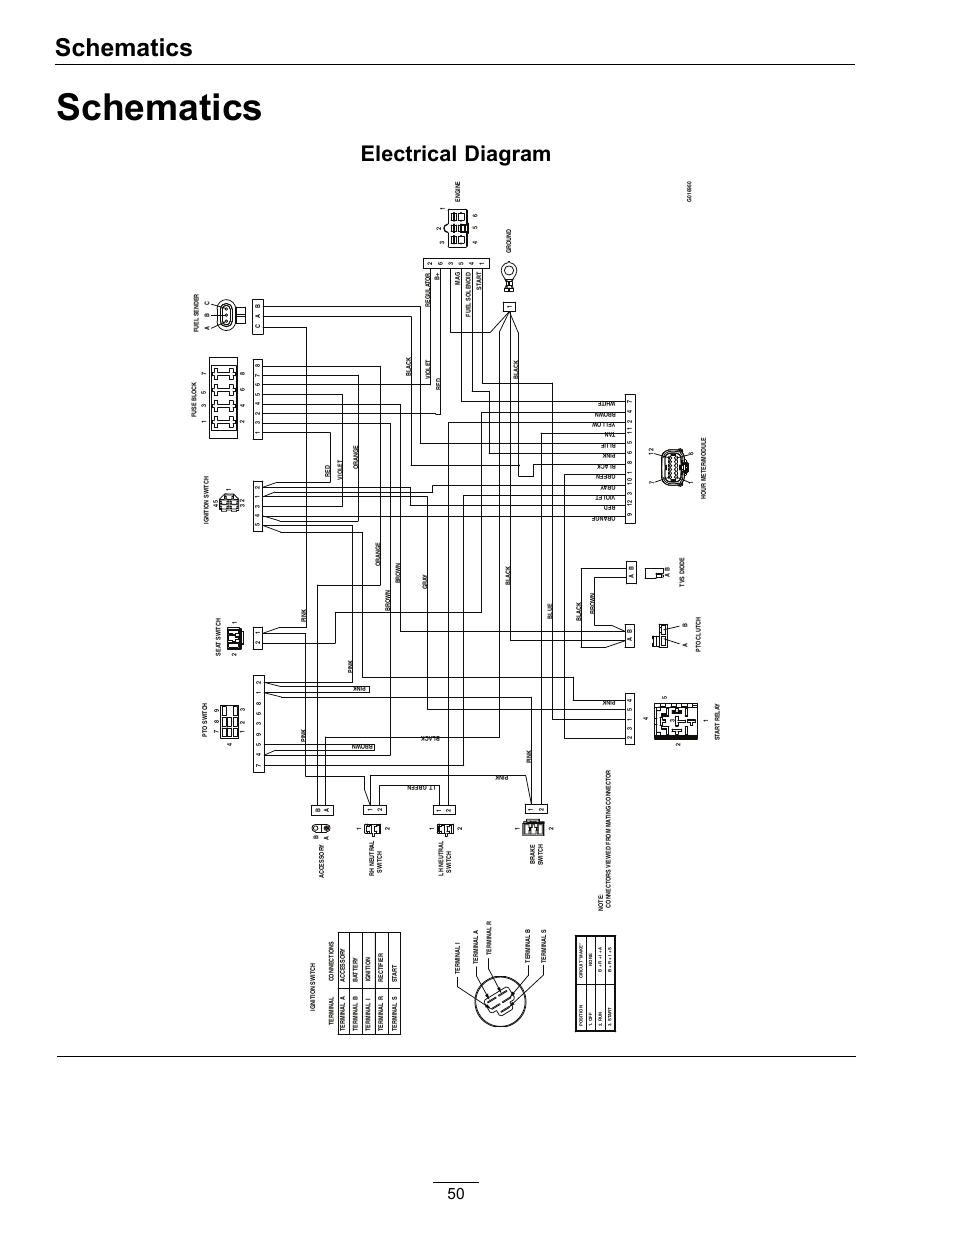 dish network vip222k wiring diagram